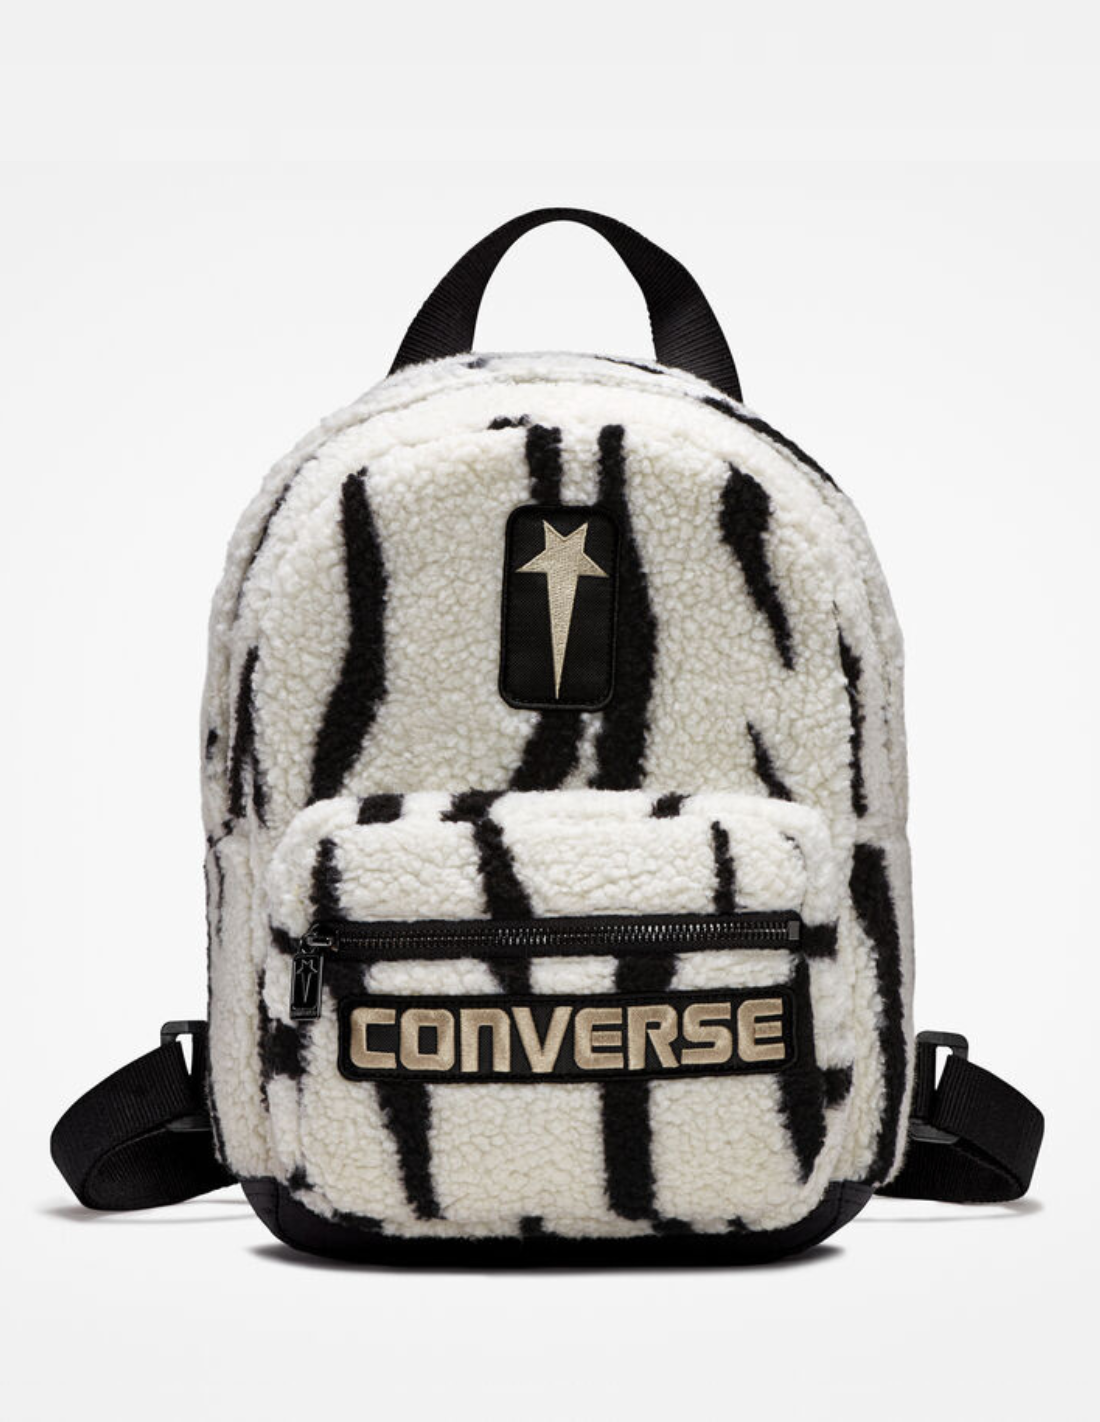 RICK OWENS X CONVERSE mini backpack in zebra faux-fur - black and white